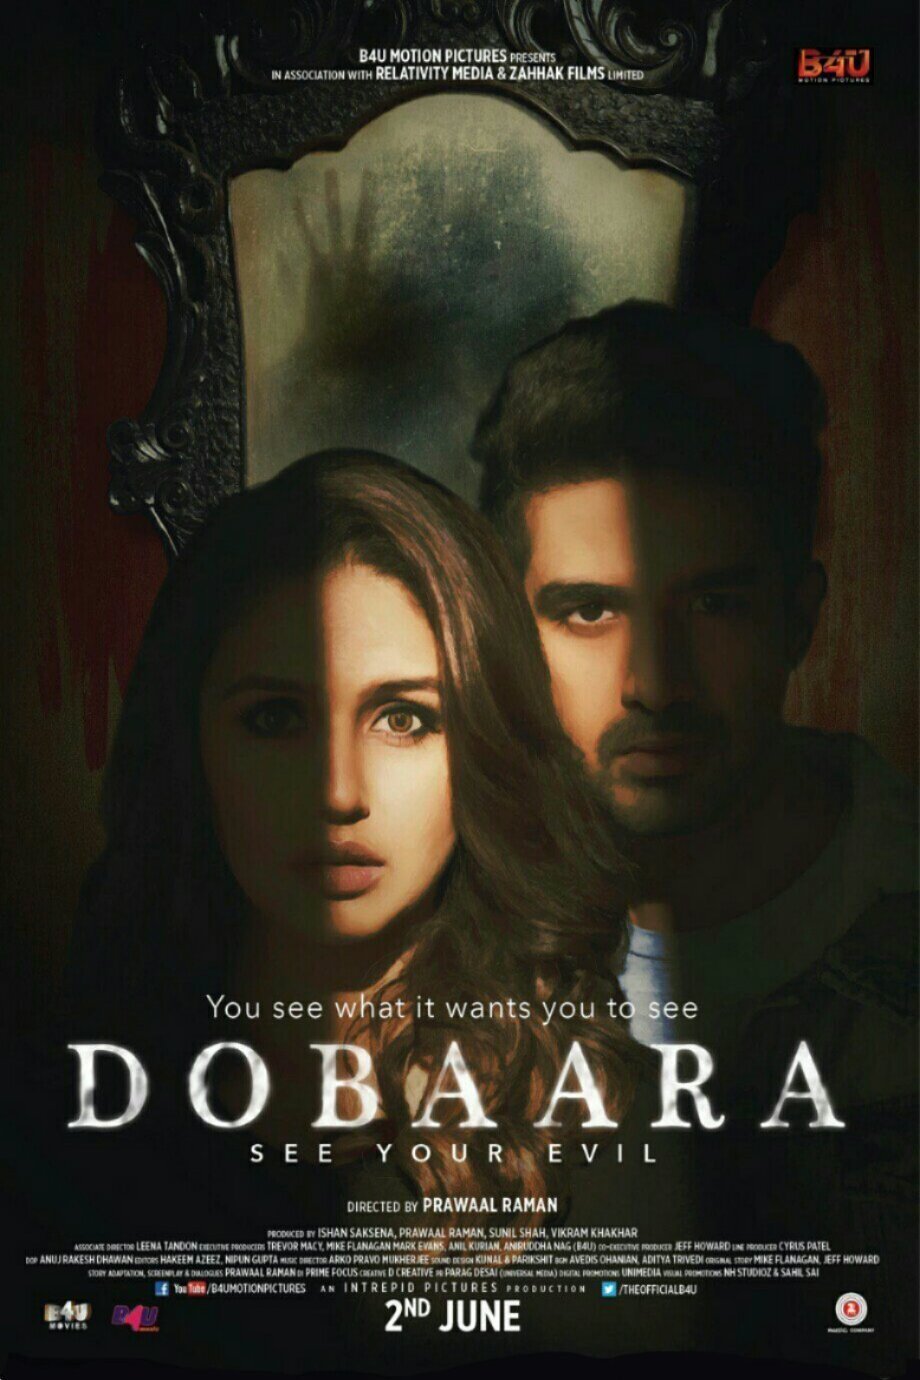 Hindi poster of the movie Dobaara: See Your Evil